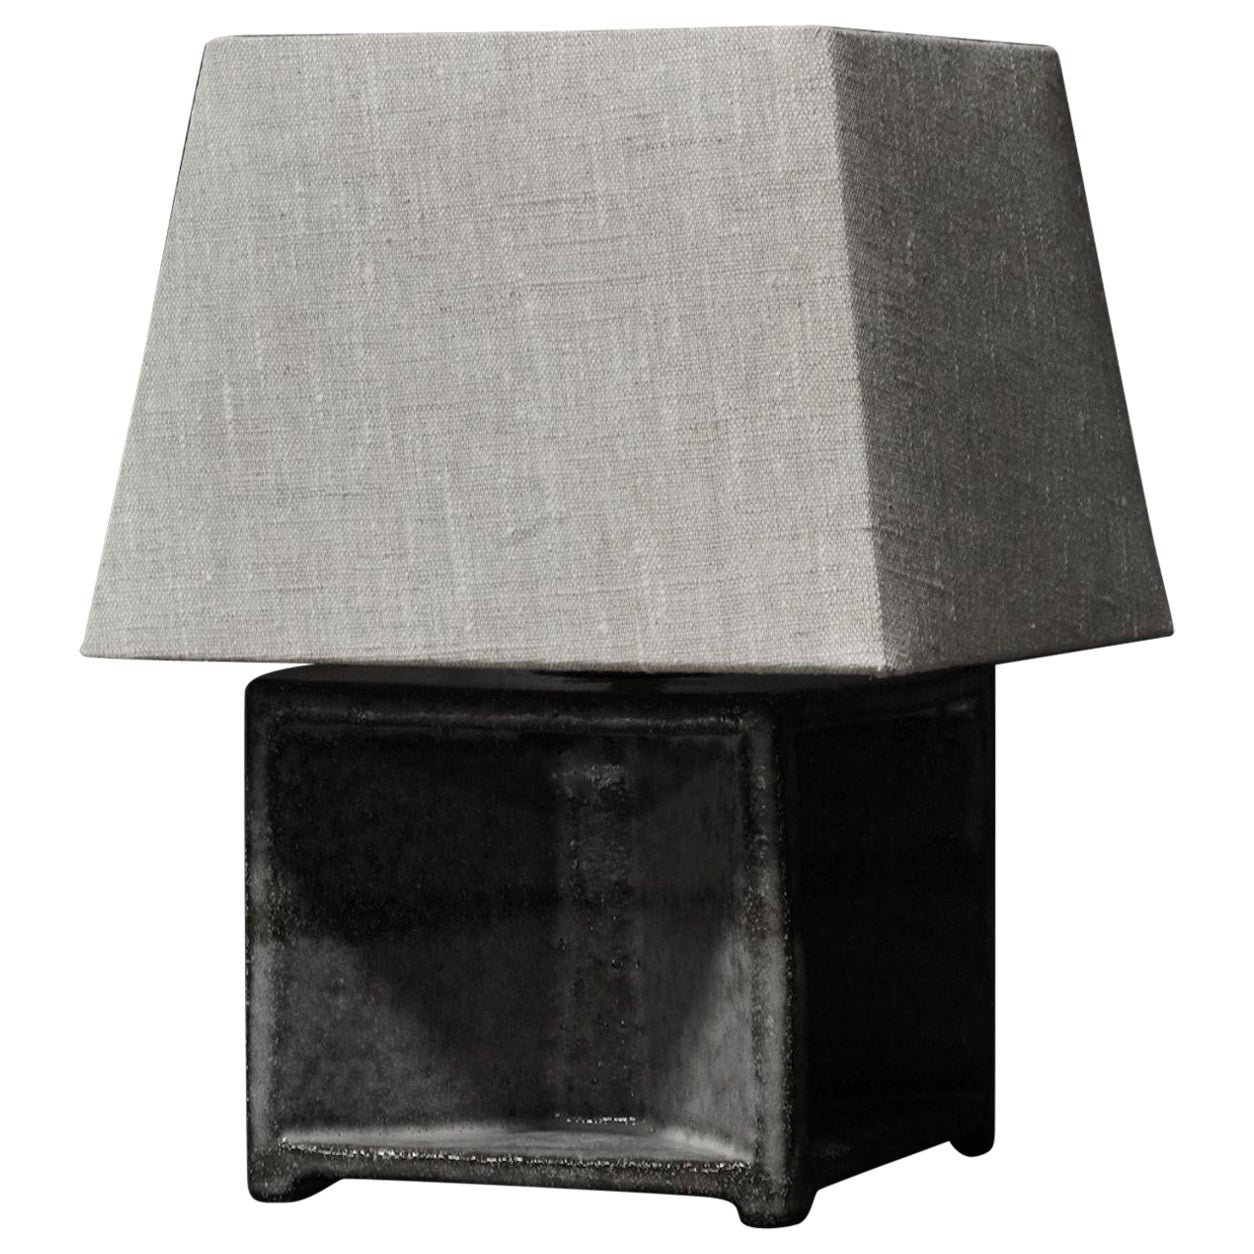 Small Square Ceramic Table Lamp